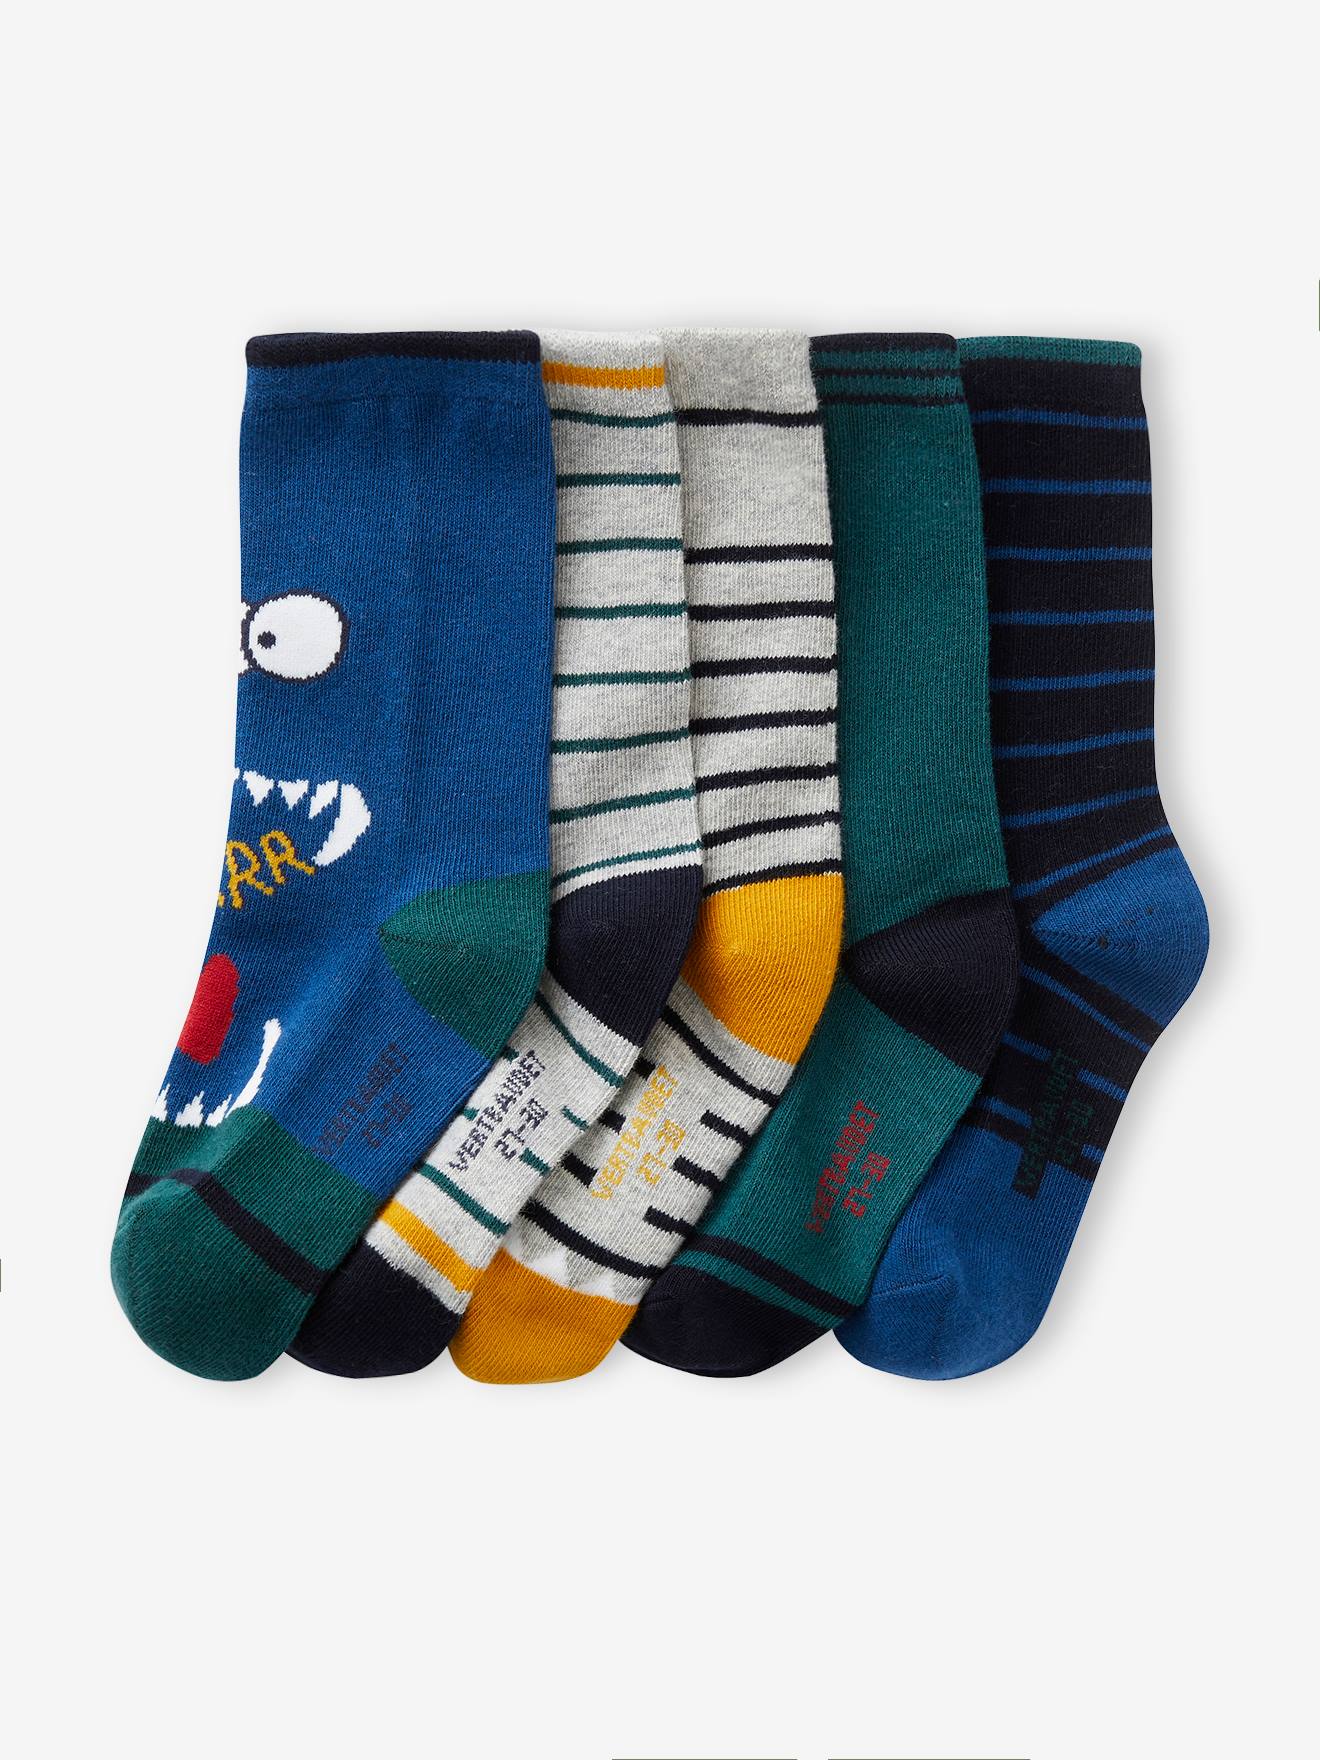 Pack de 5 pares de calcetines divertidos